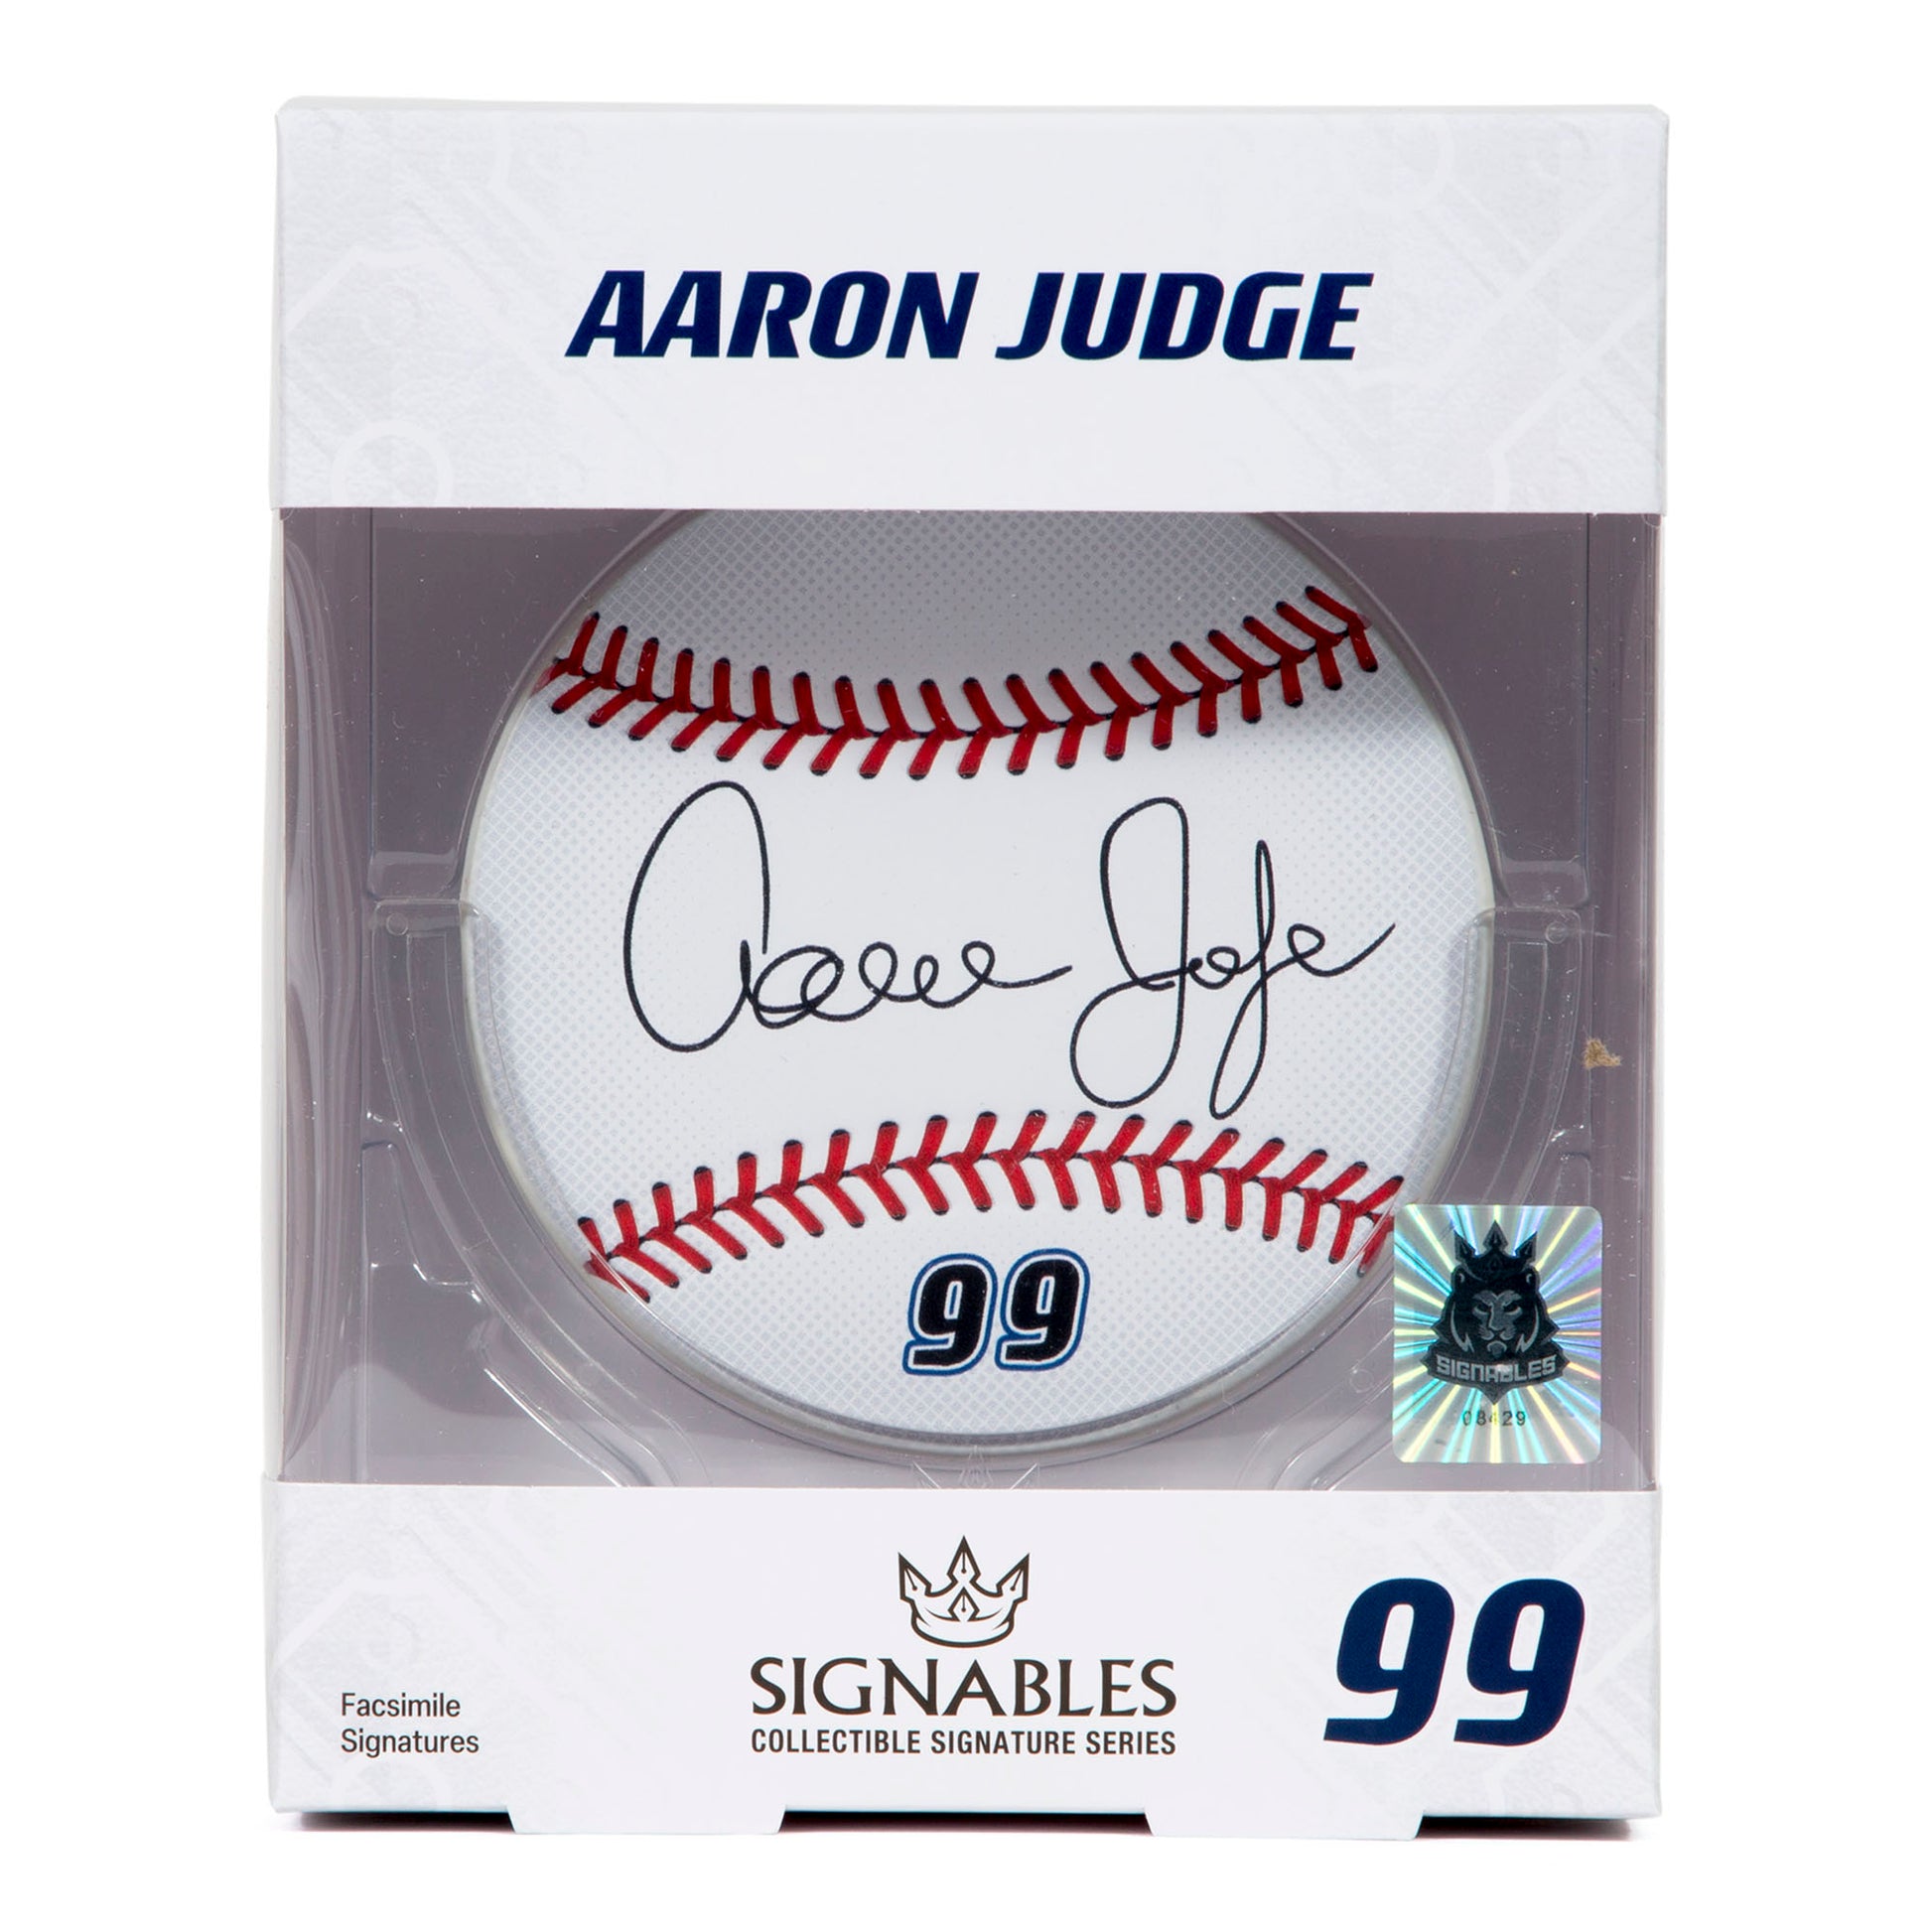  MLBPA - Major League Baseball Aaron Judge MLBVN010